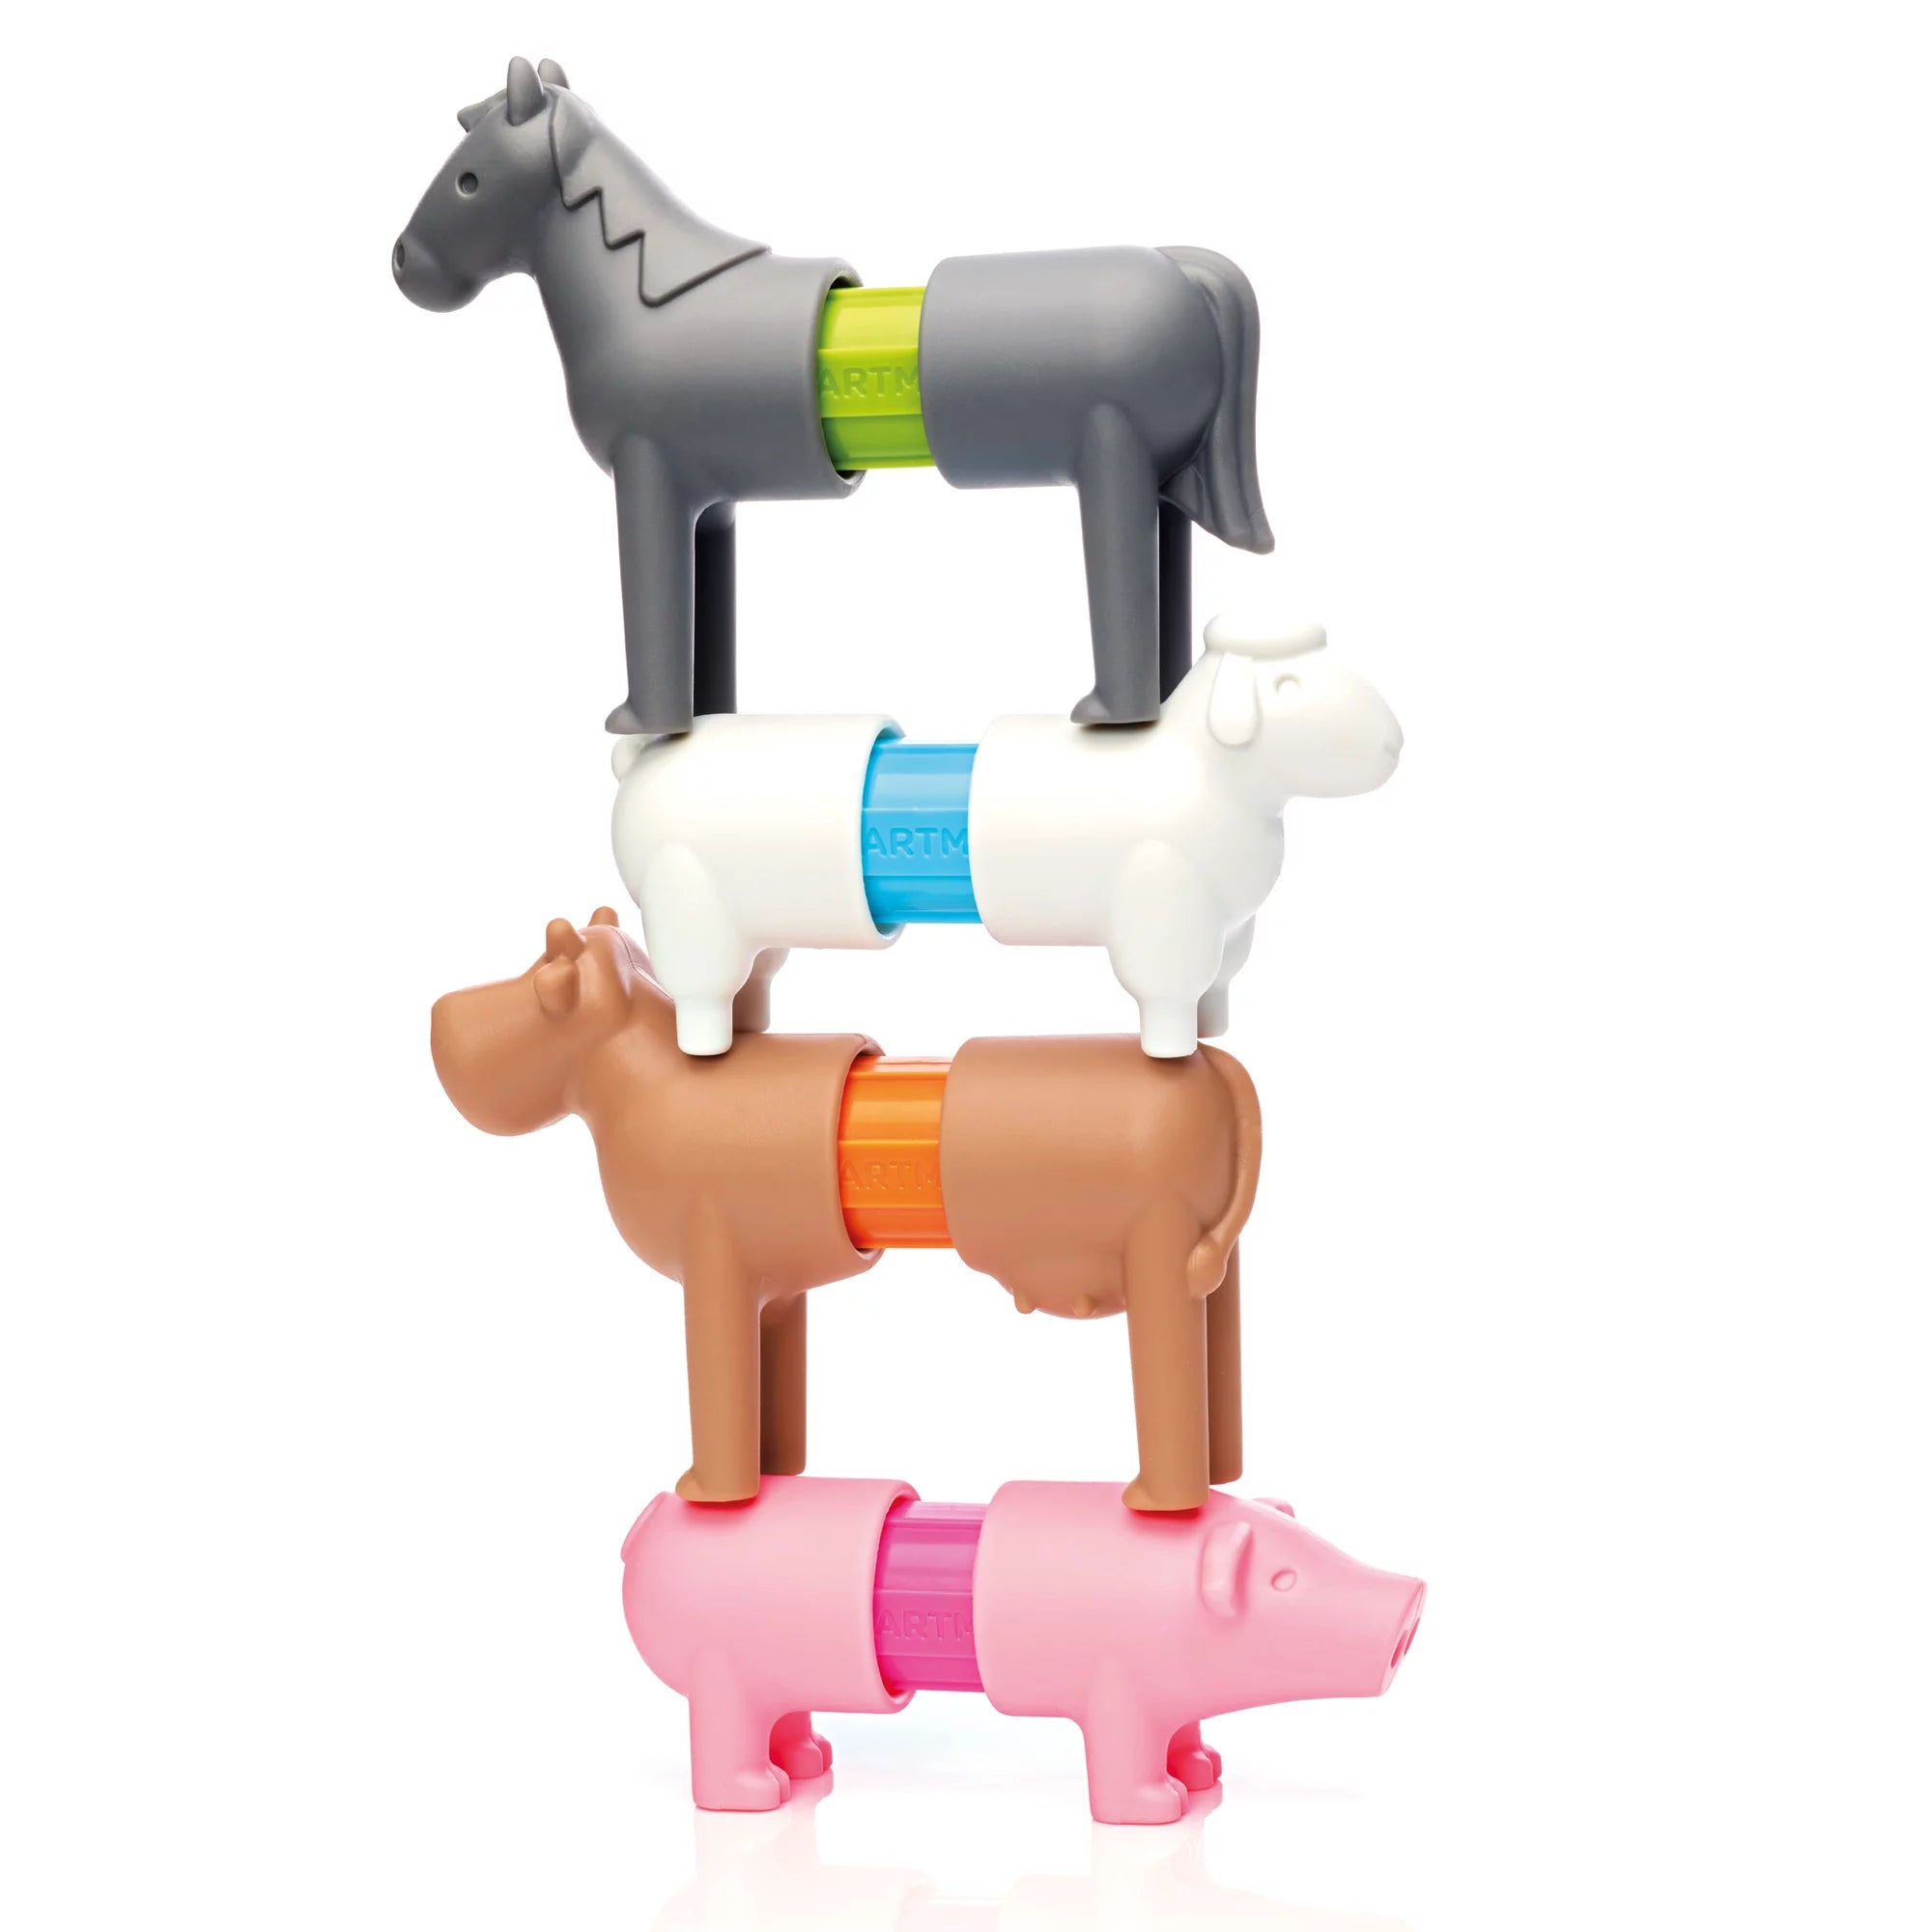 IUVI Games: magnetyczne klocki Smart Max My First Farm Animals - Noski Noski